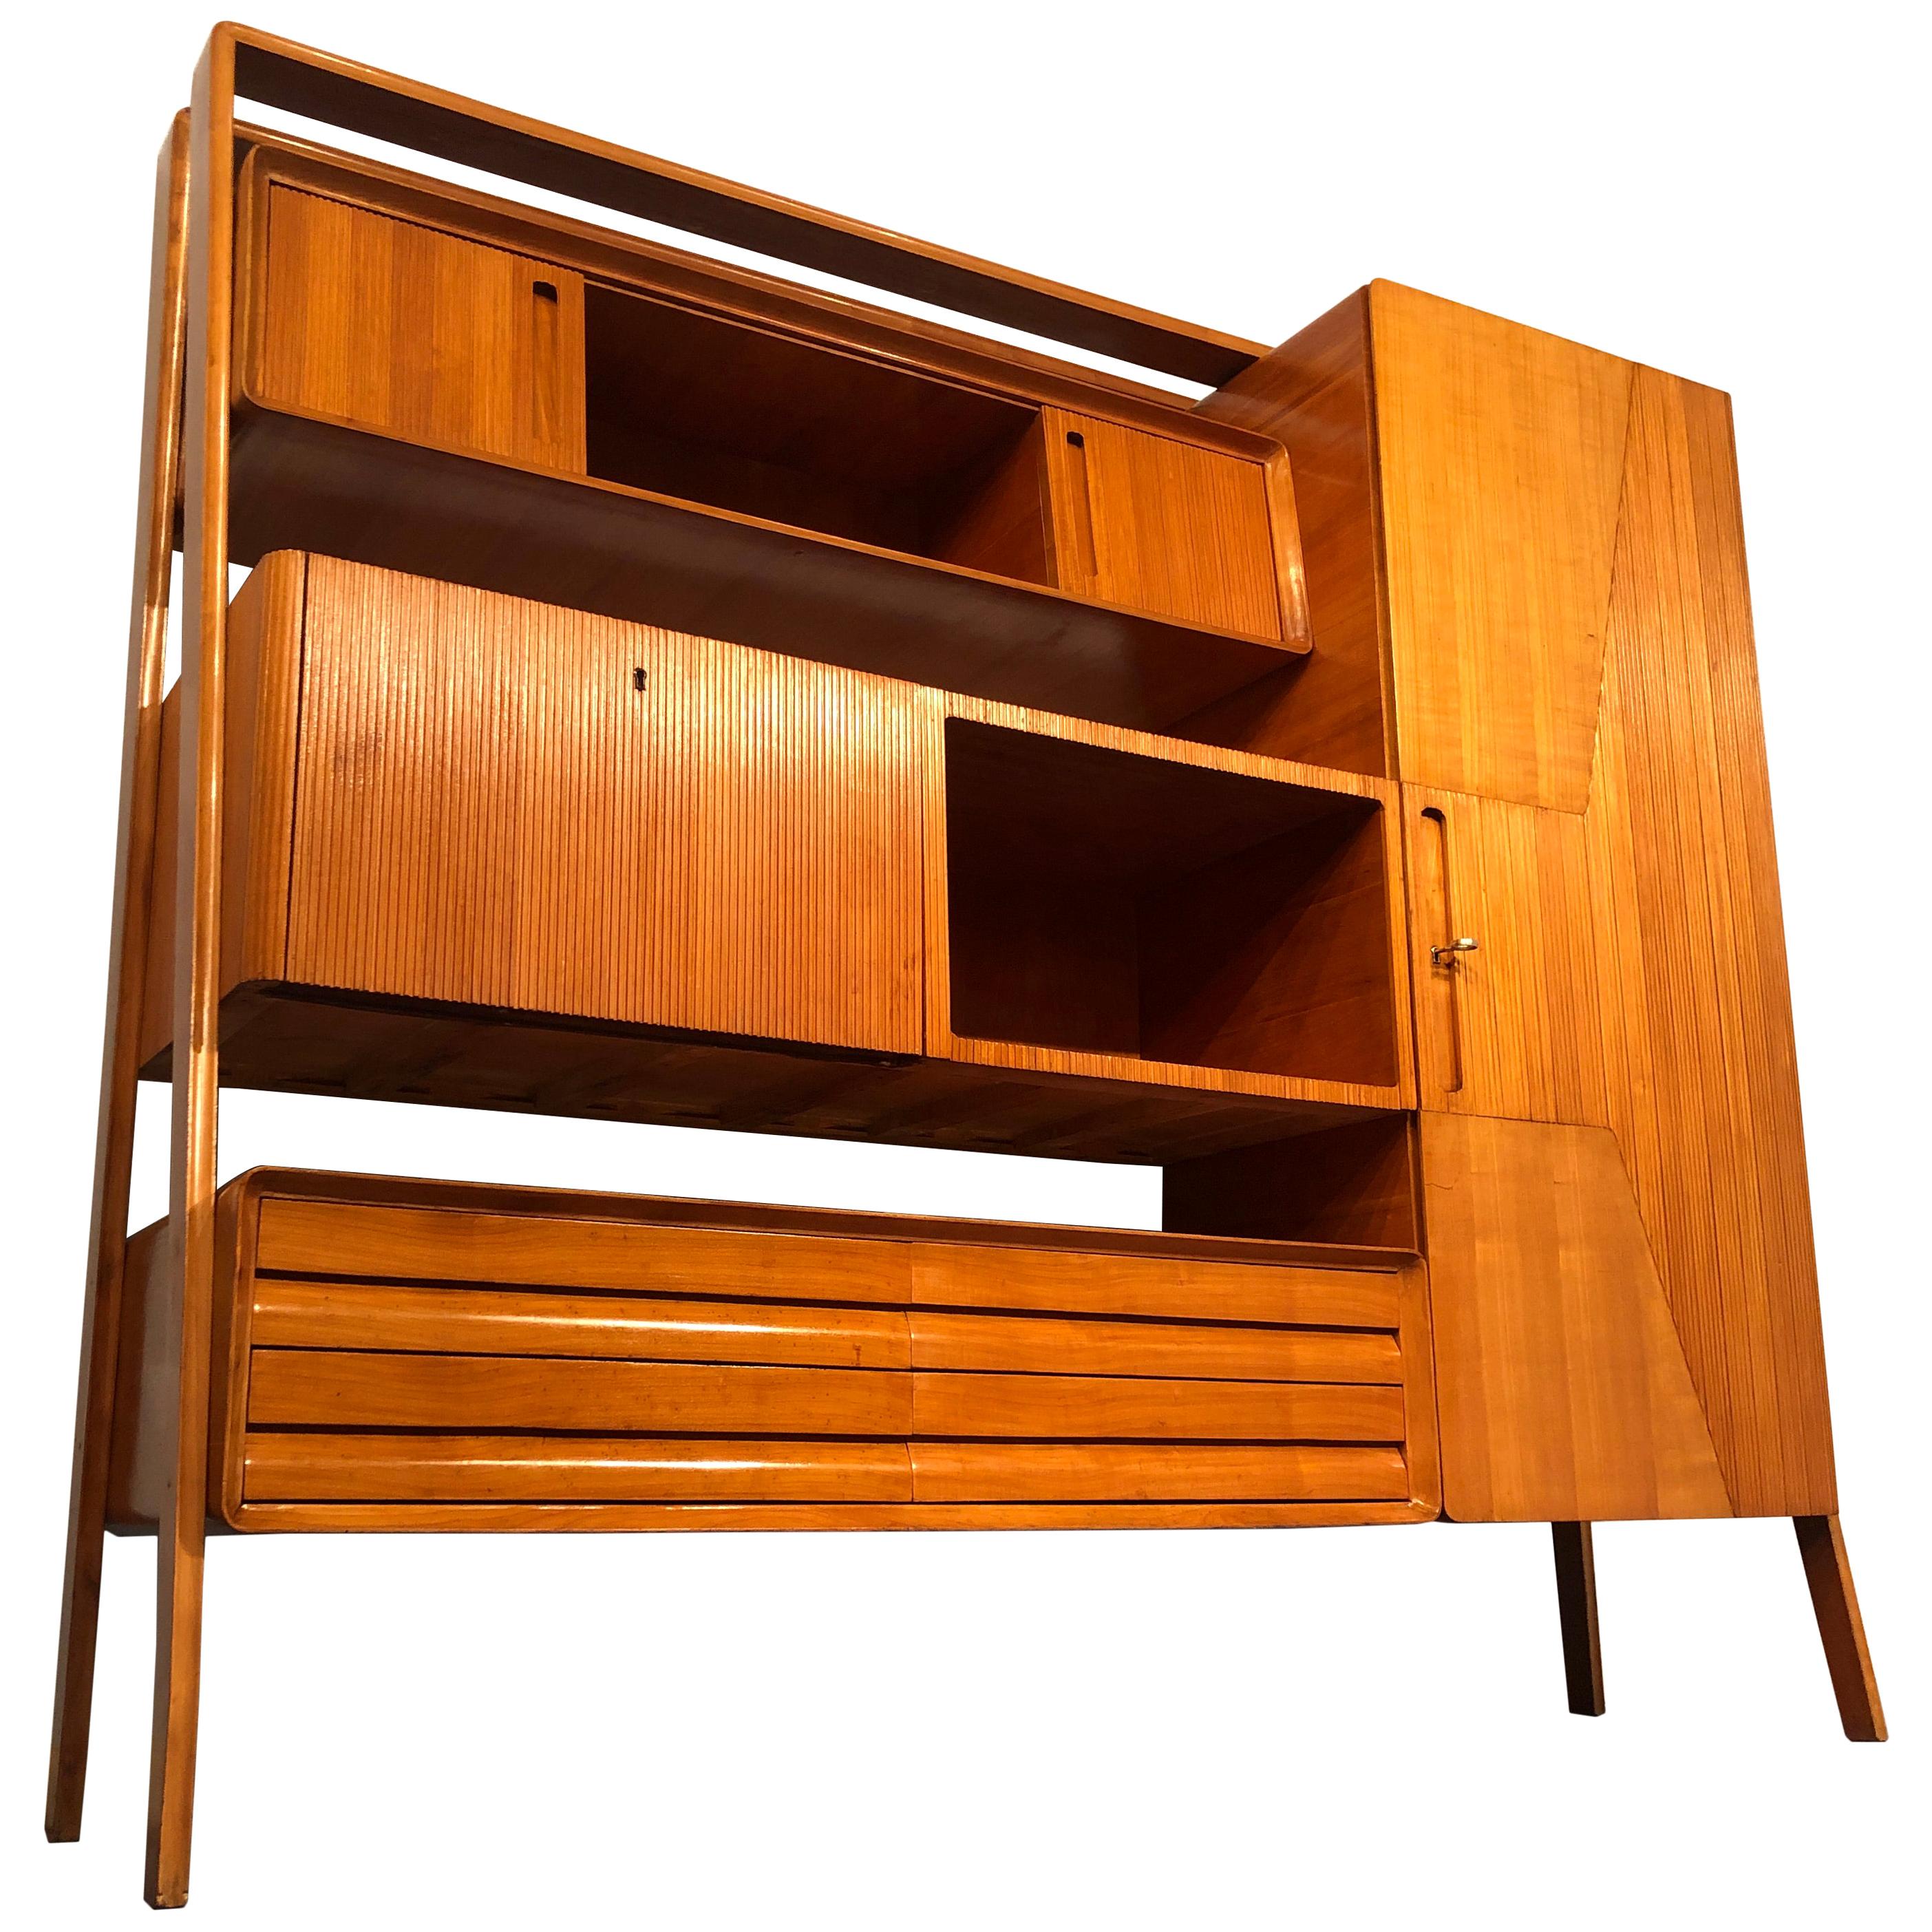 Italian Midcentury Cherrywood Sideboard Bookcase by La Permanente Cantù, 1950s